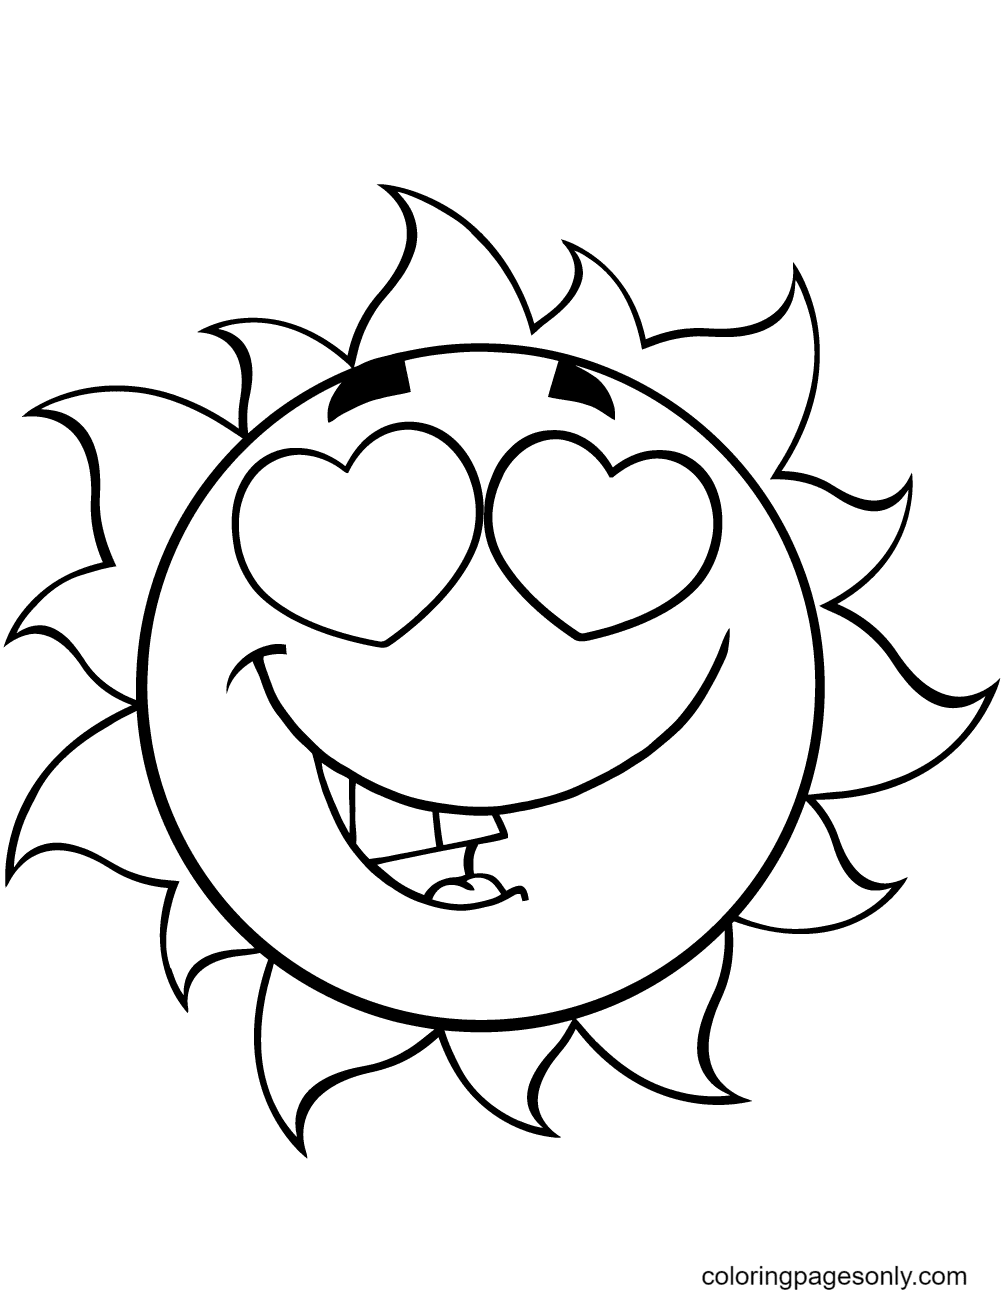 Персонаж мультфильма "Люблю Солнце" от Солнца